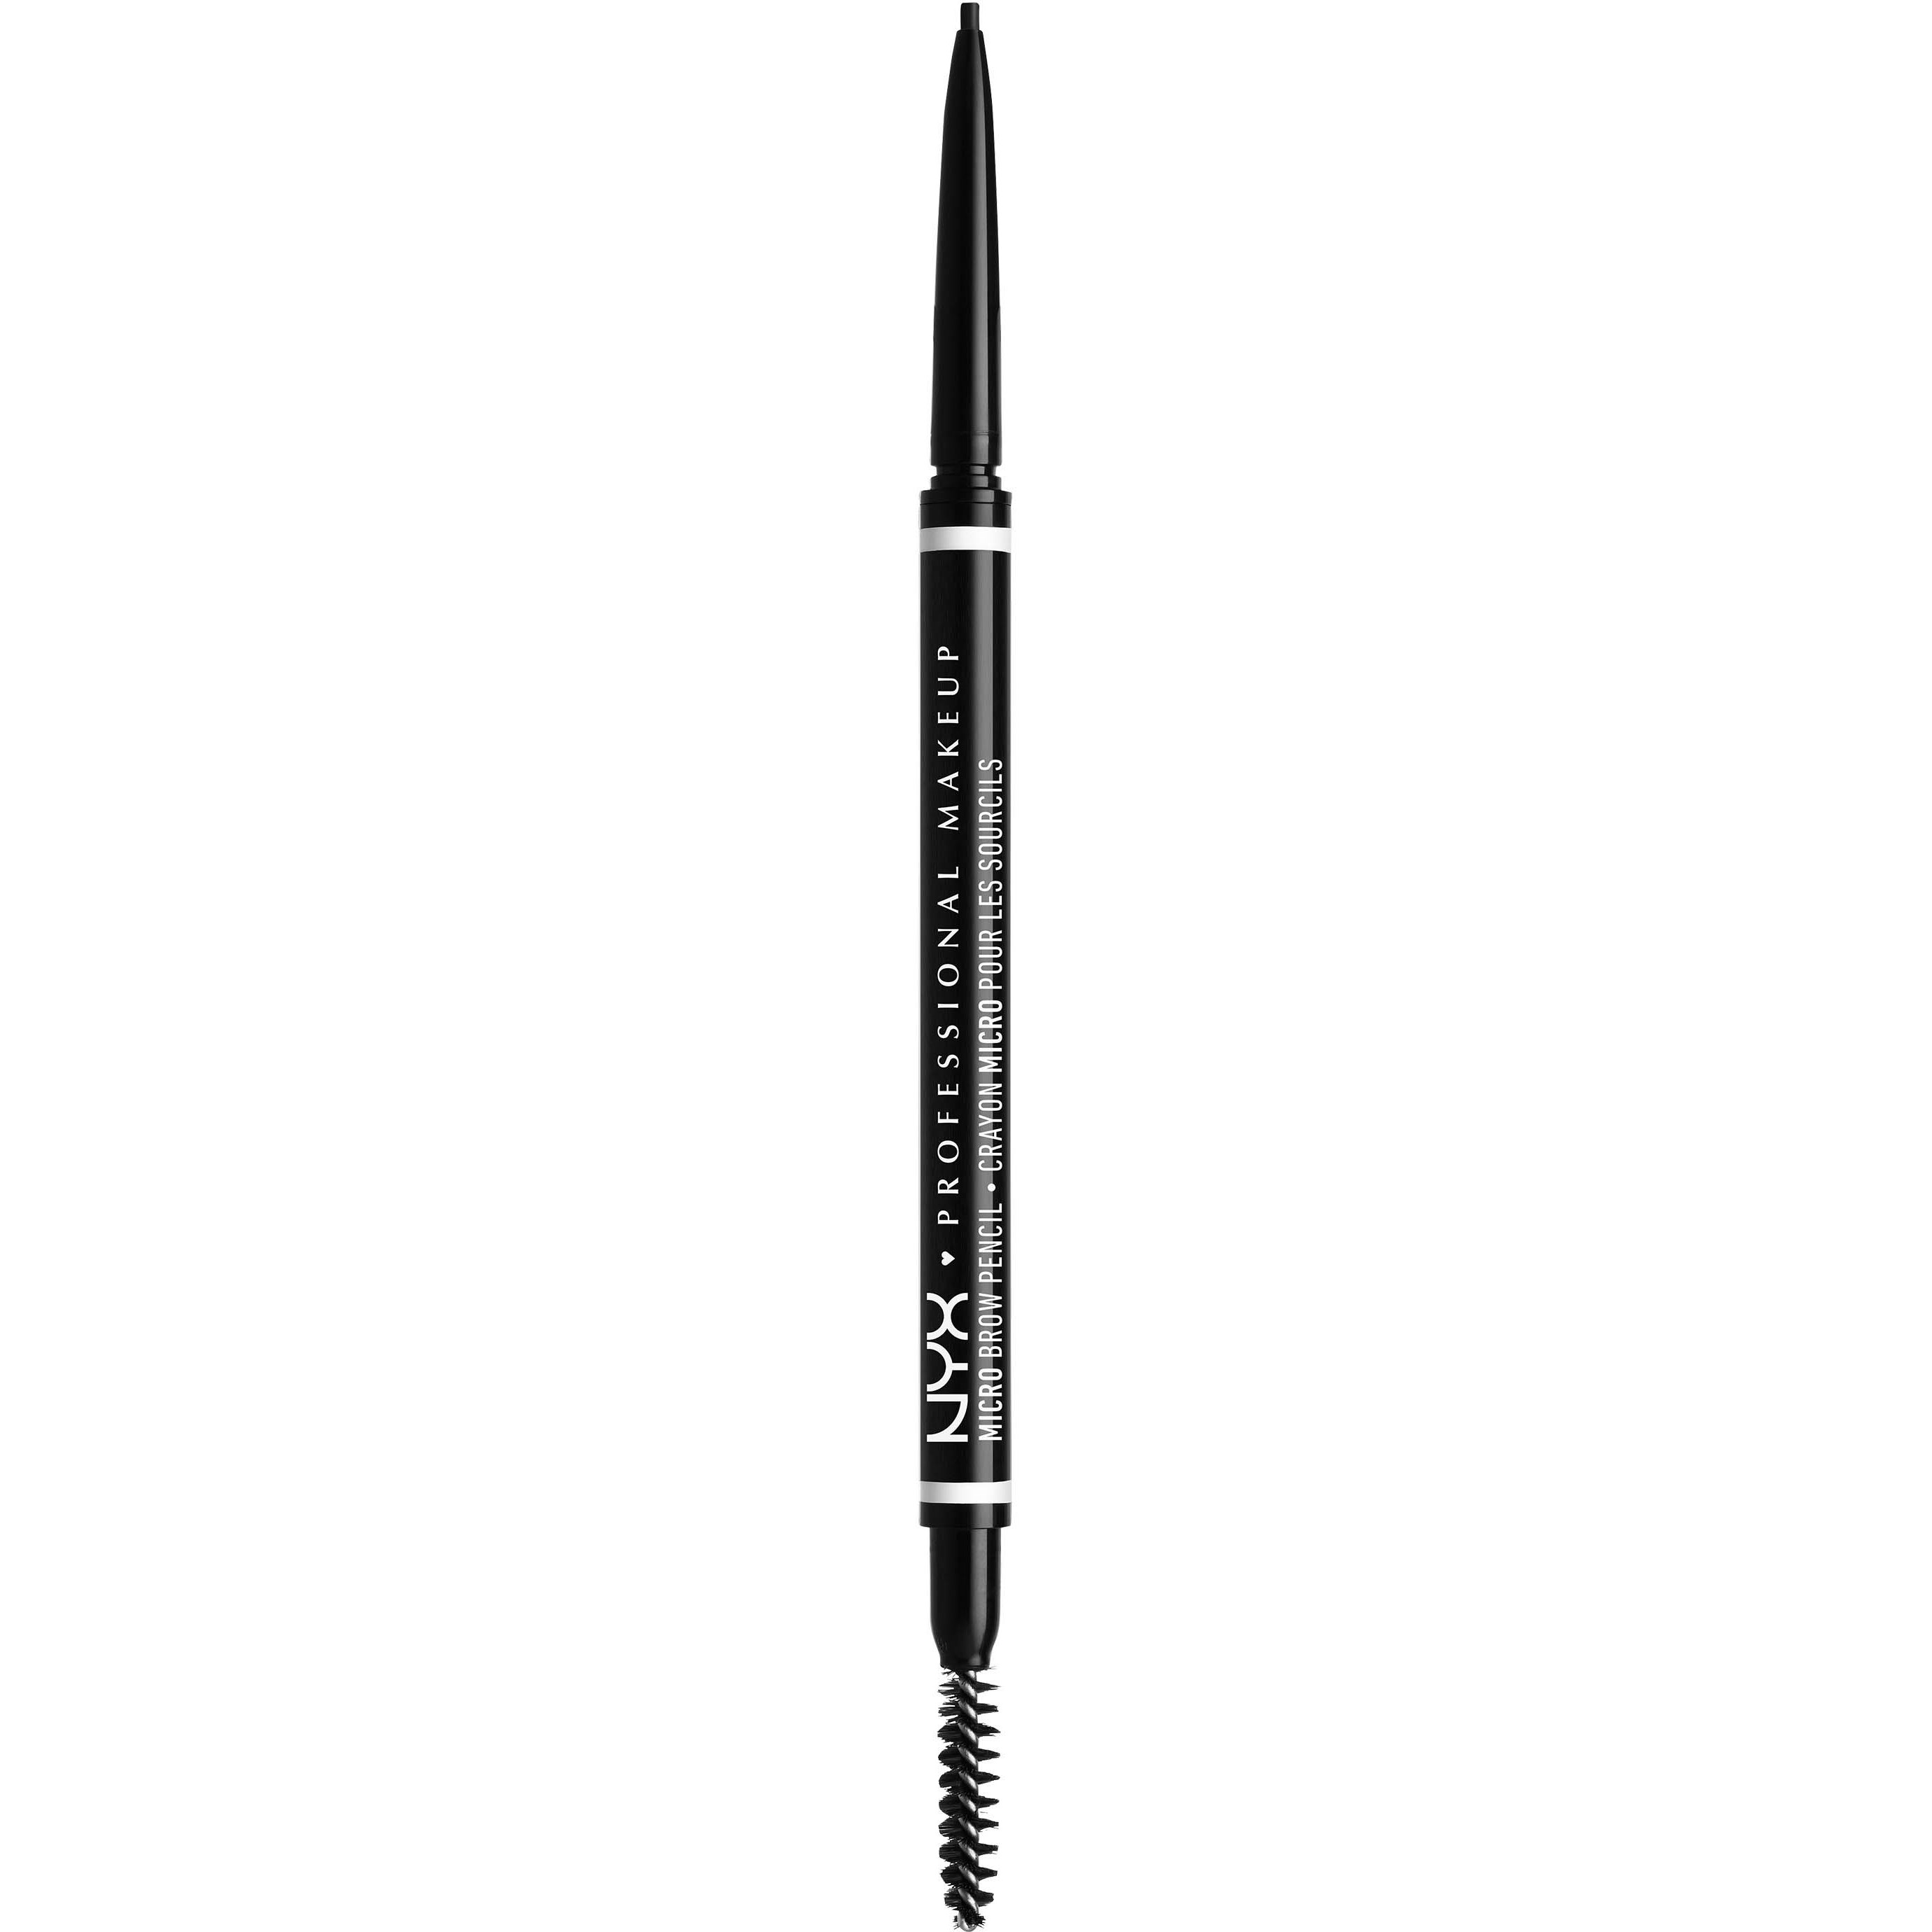 NYX PROF. MAKEUP Micro Brow Pencil - Black